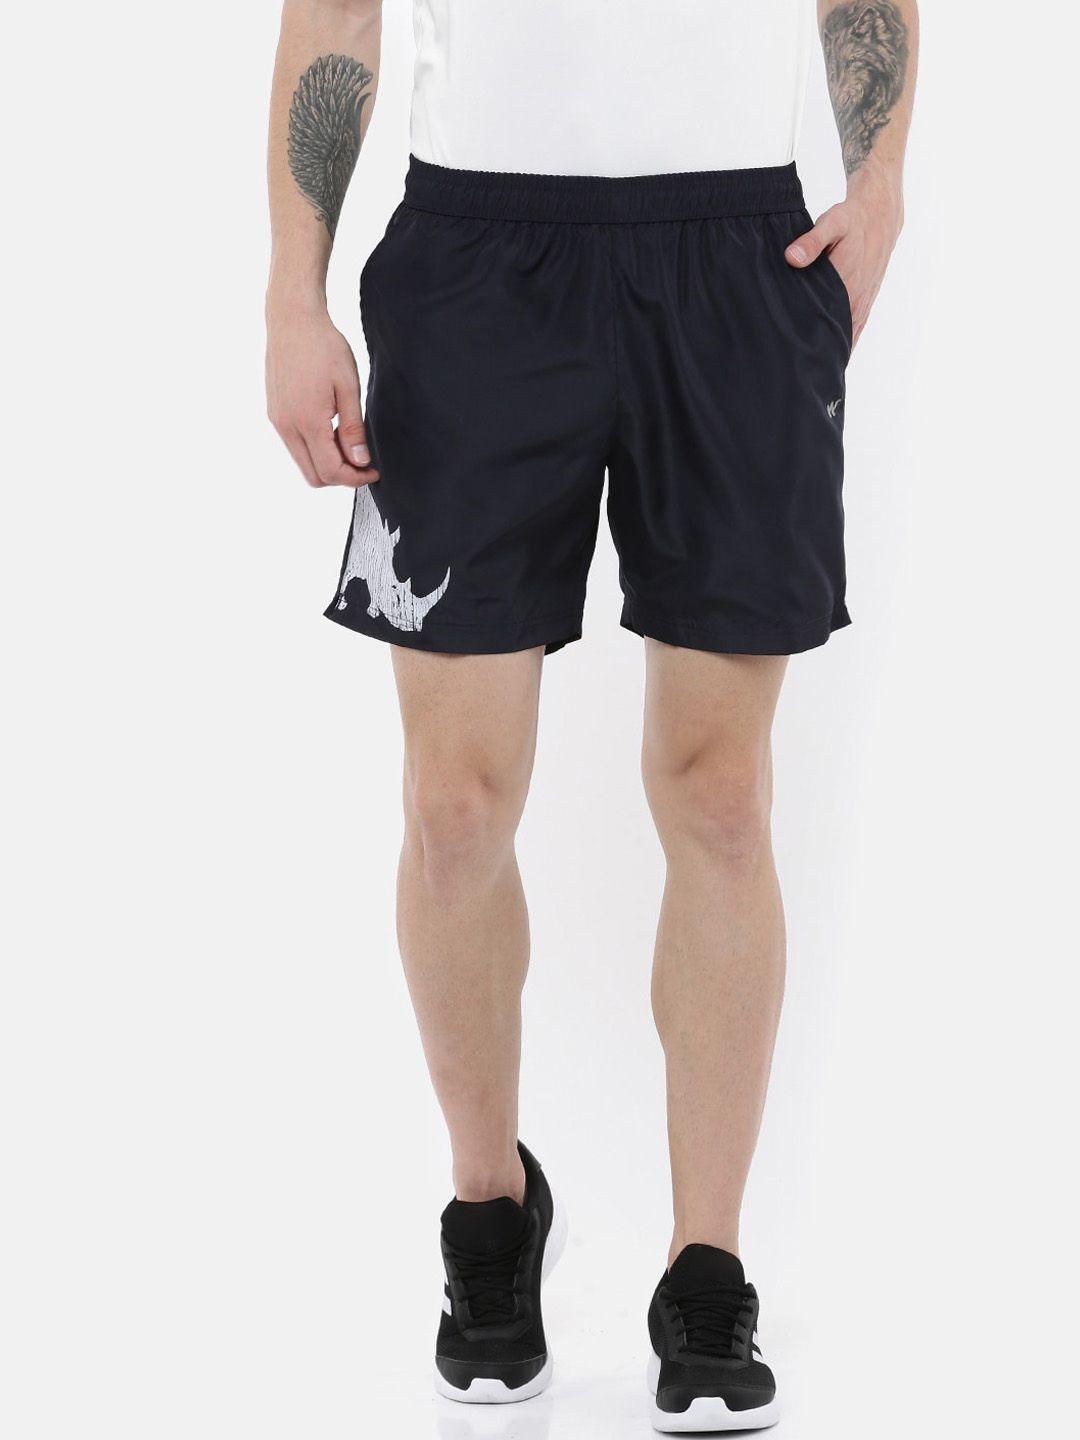 wildcraft men navy blue solid mid-rise running sports shorts